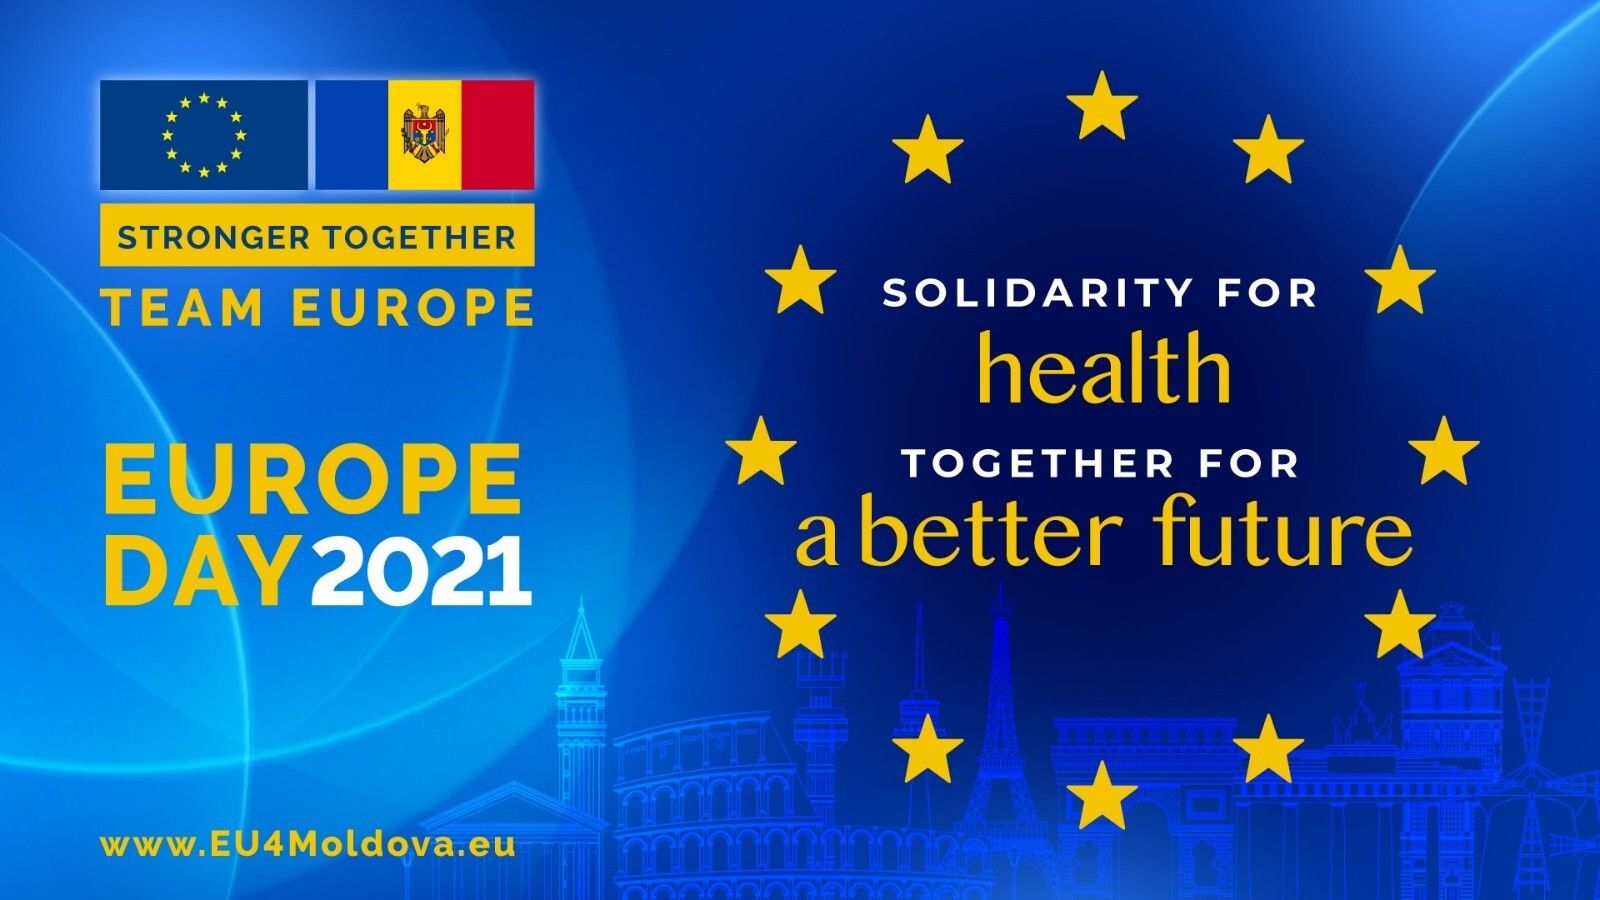 EUROPE DAY 2021 photo